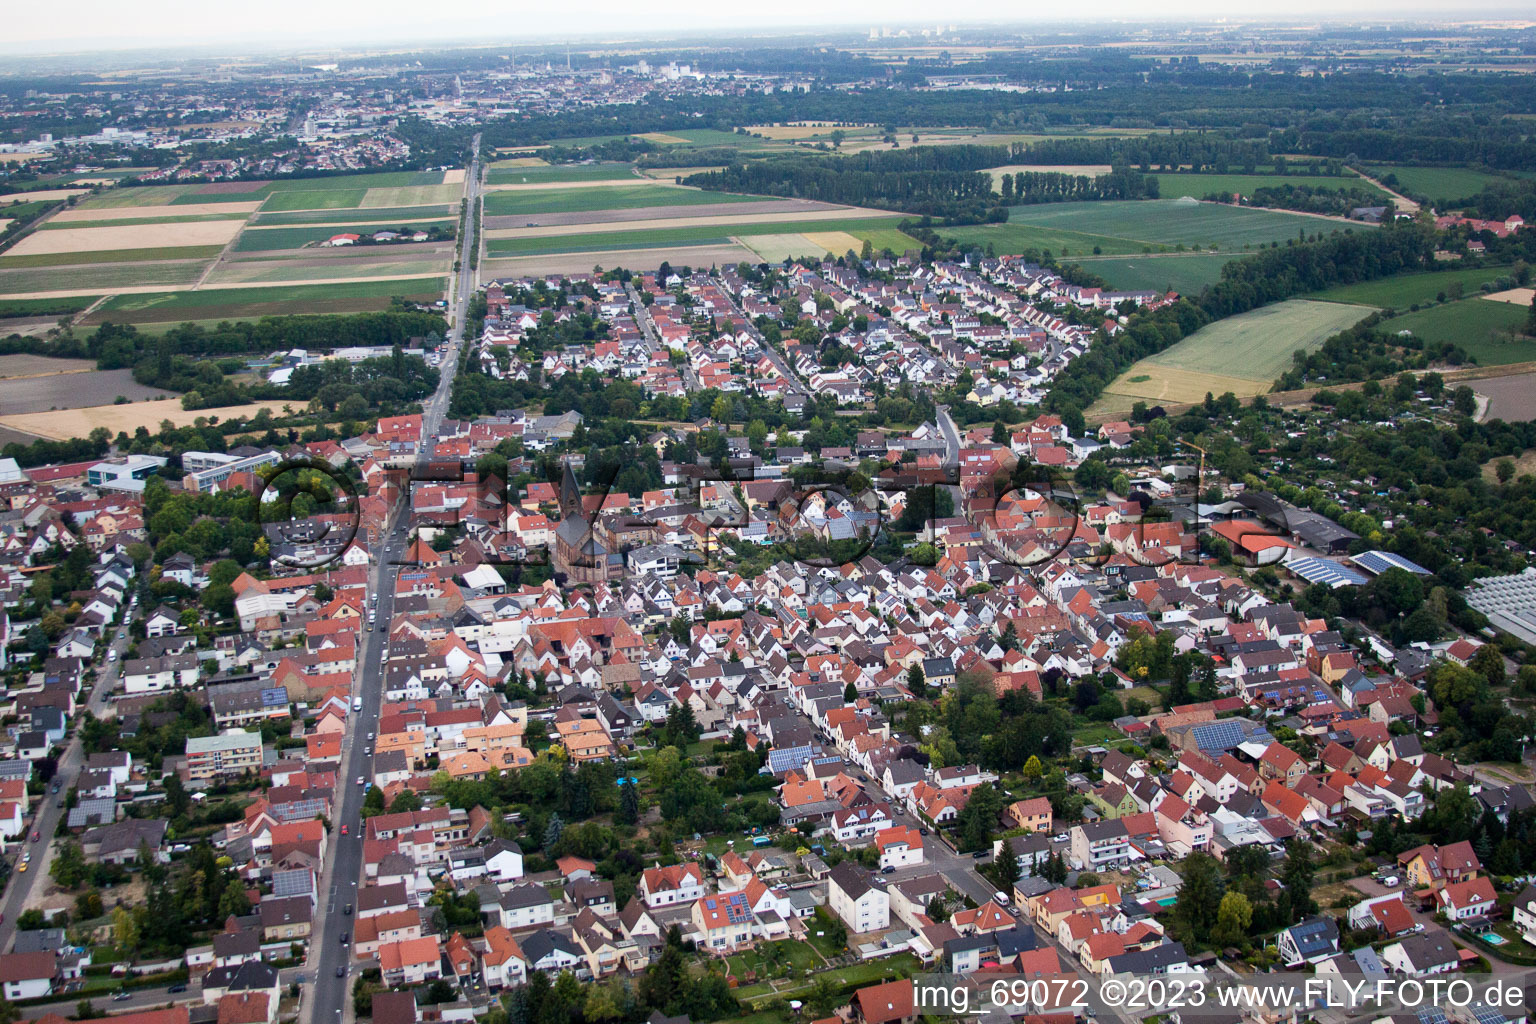 Aerial view of District Bobenheim in Bobenheim-Roxheim in the state Rhineland-Palatinate, Germany